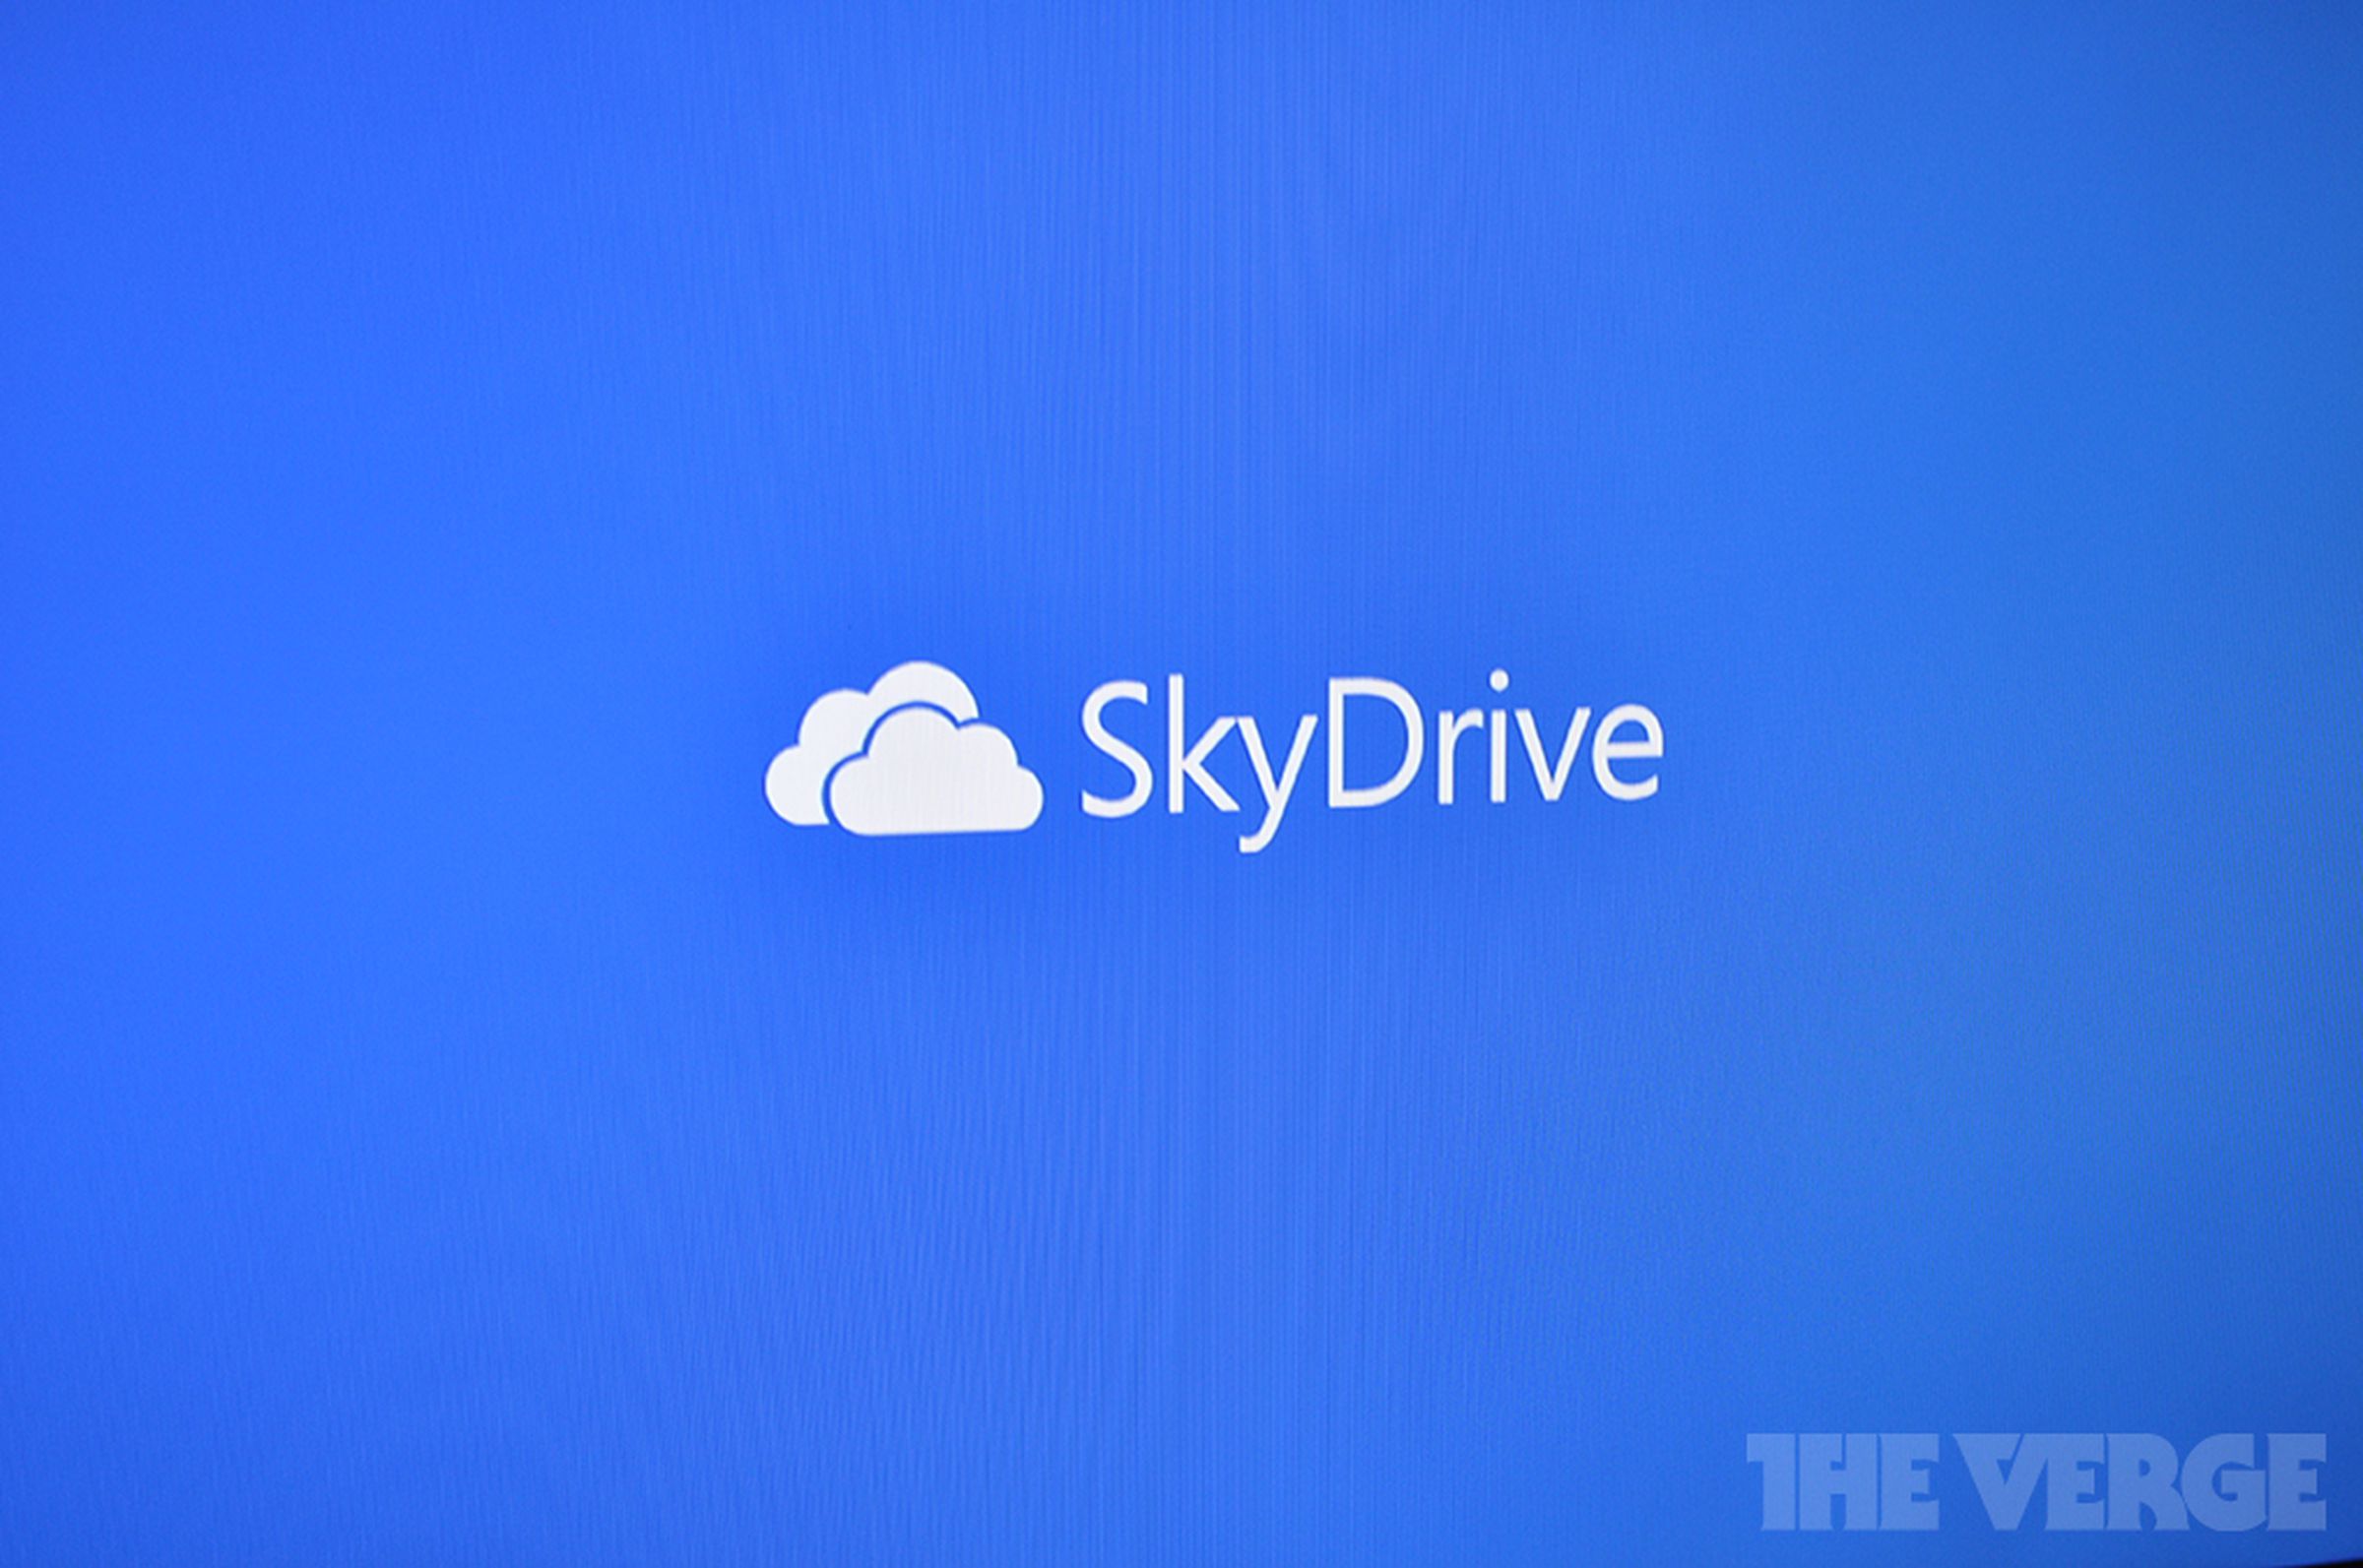 SkyDrive for Xbox photos